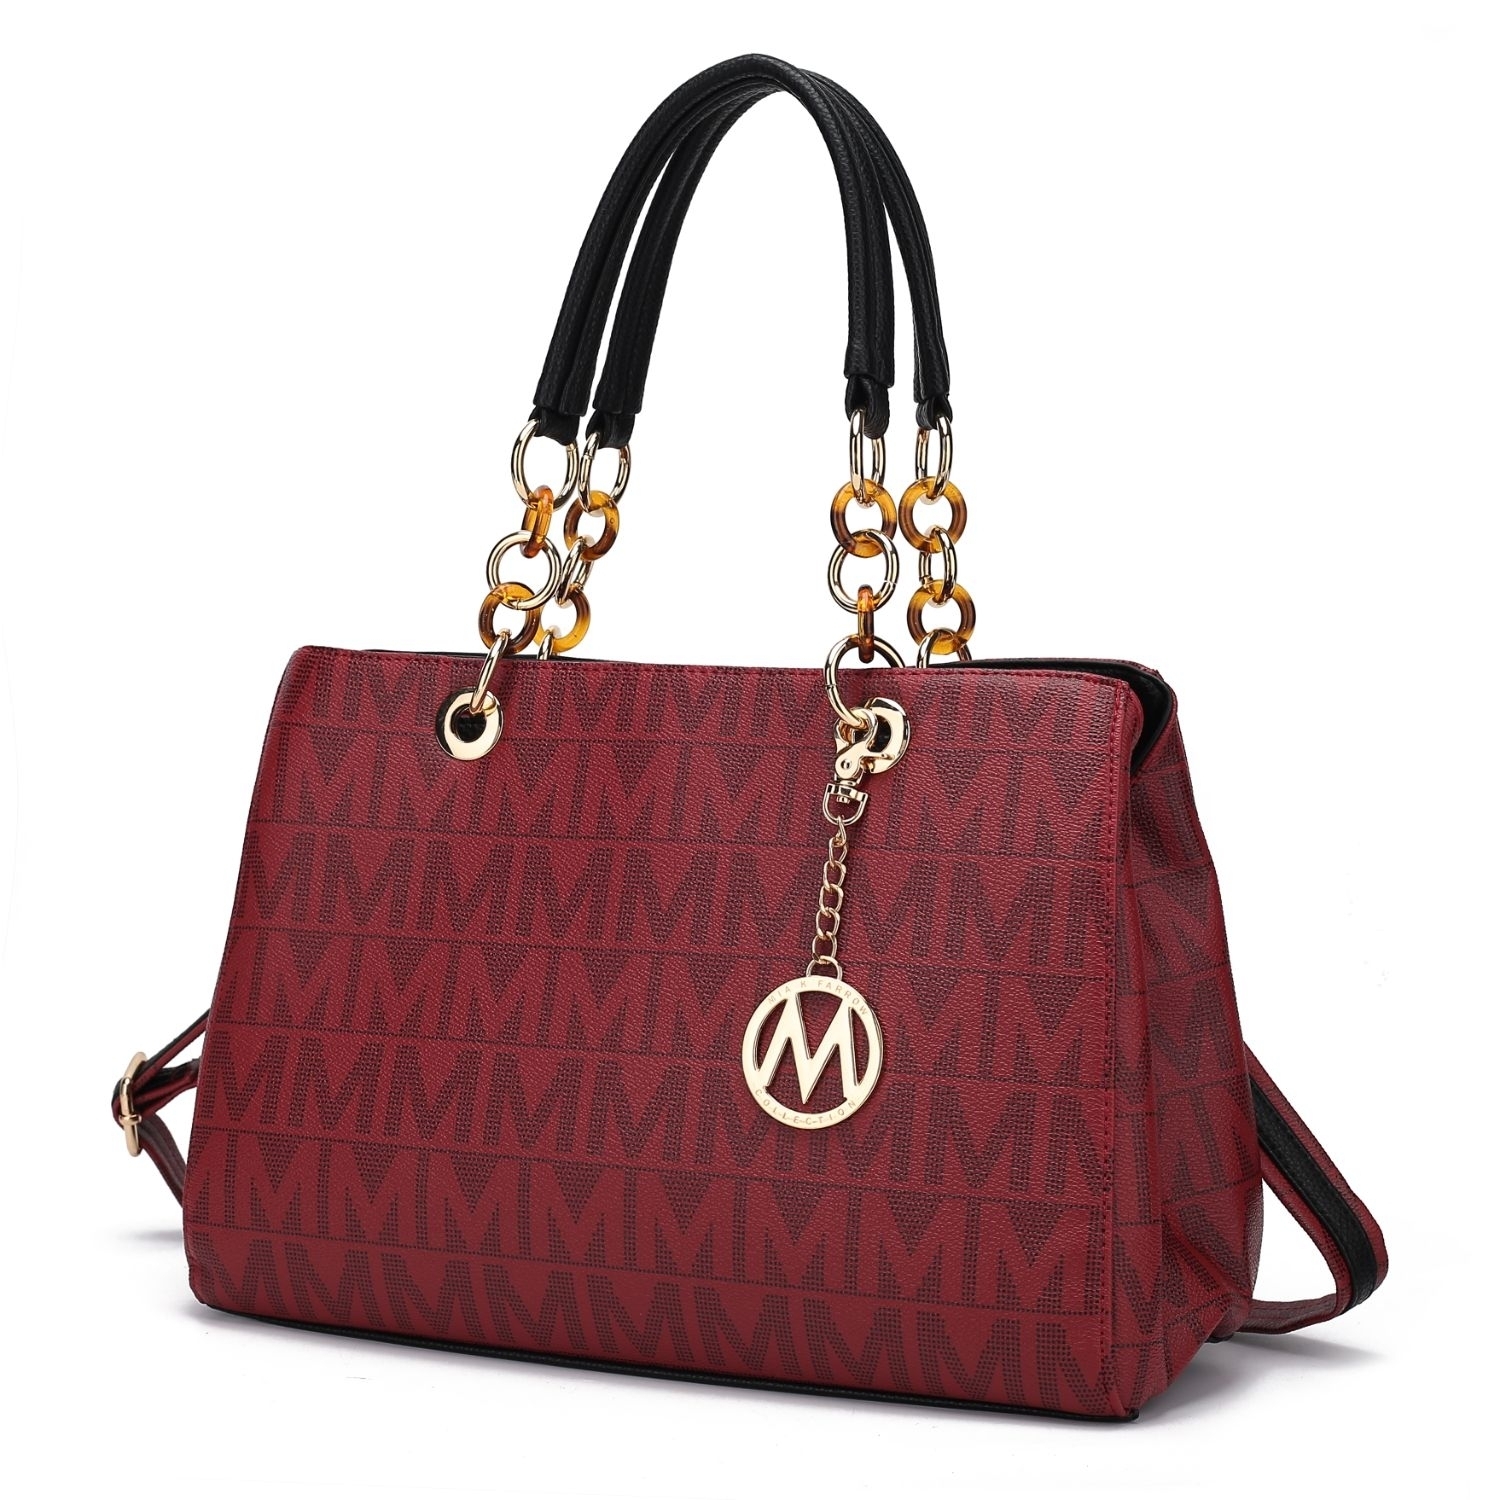 MKF Collection Sirna M Signature Tote Handbag By Mia K. - Burgundy